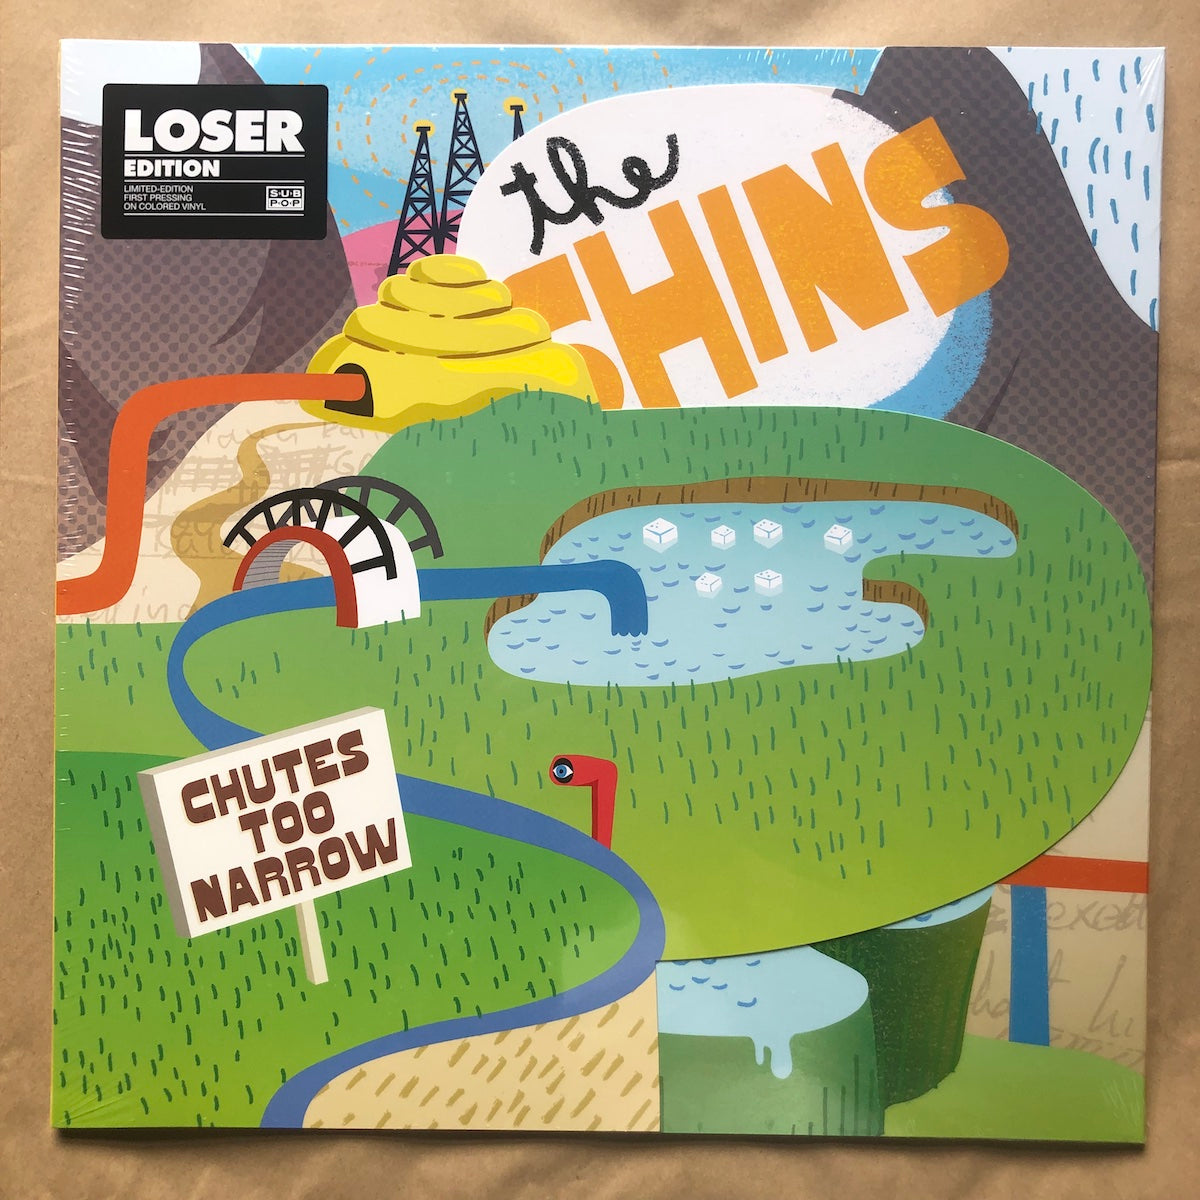 Chutes Too Narrow (20th Anniversary Remaster): Loser Edition Transparent Sun Yellow Vinyl LP